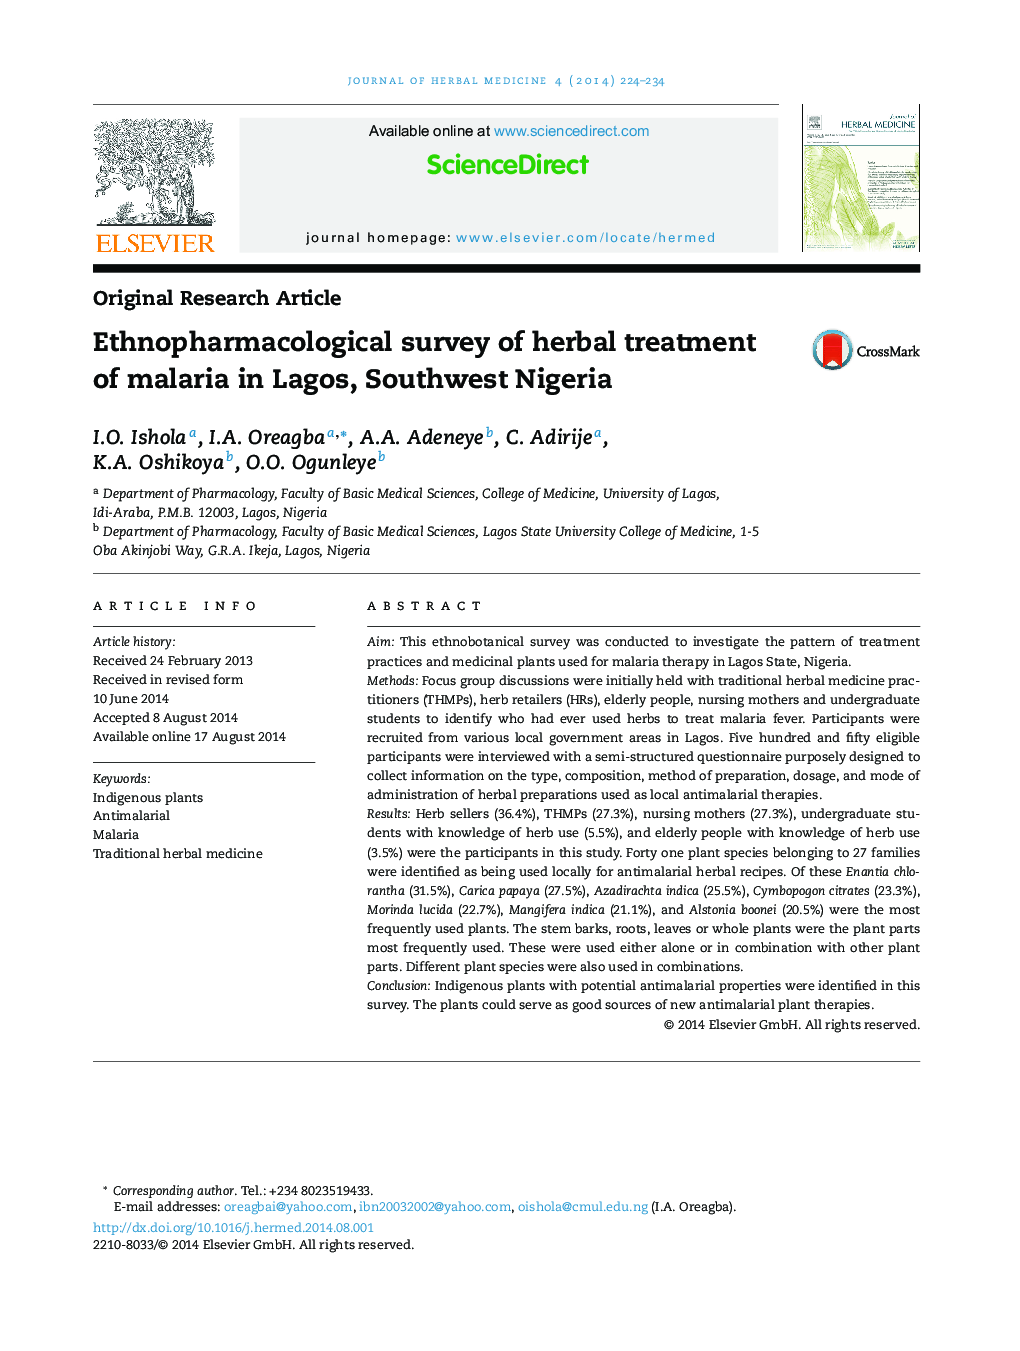 Ethnopharmacological survey of herbal treatment of malaria in Lagos, Southwest Nigeria